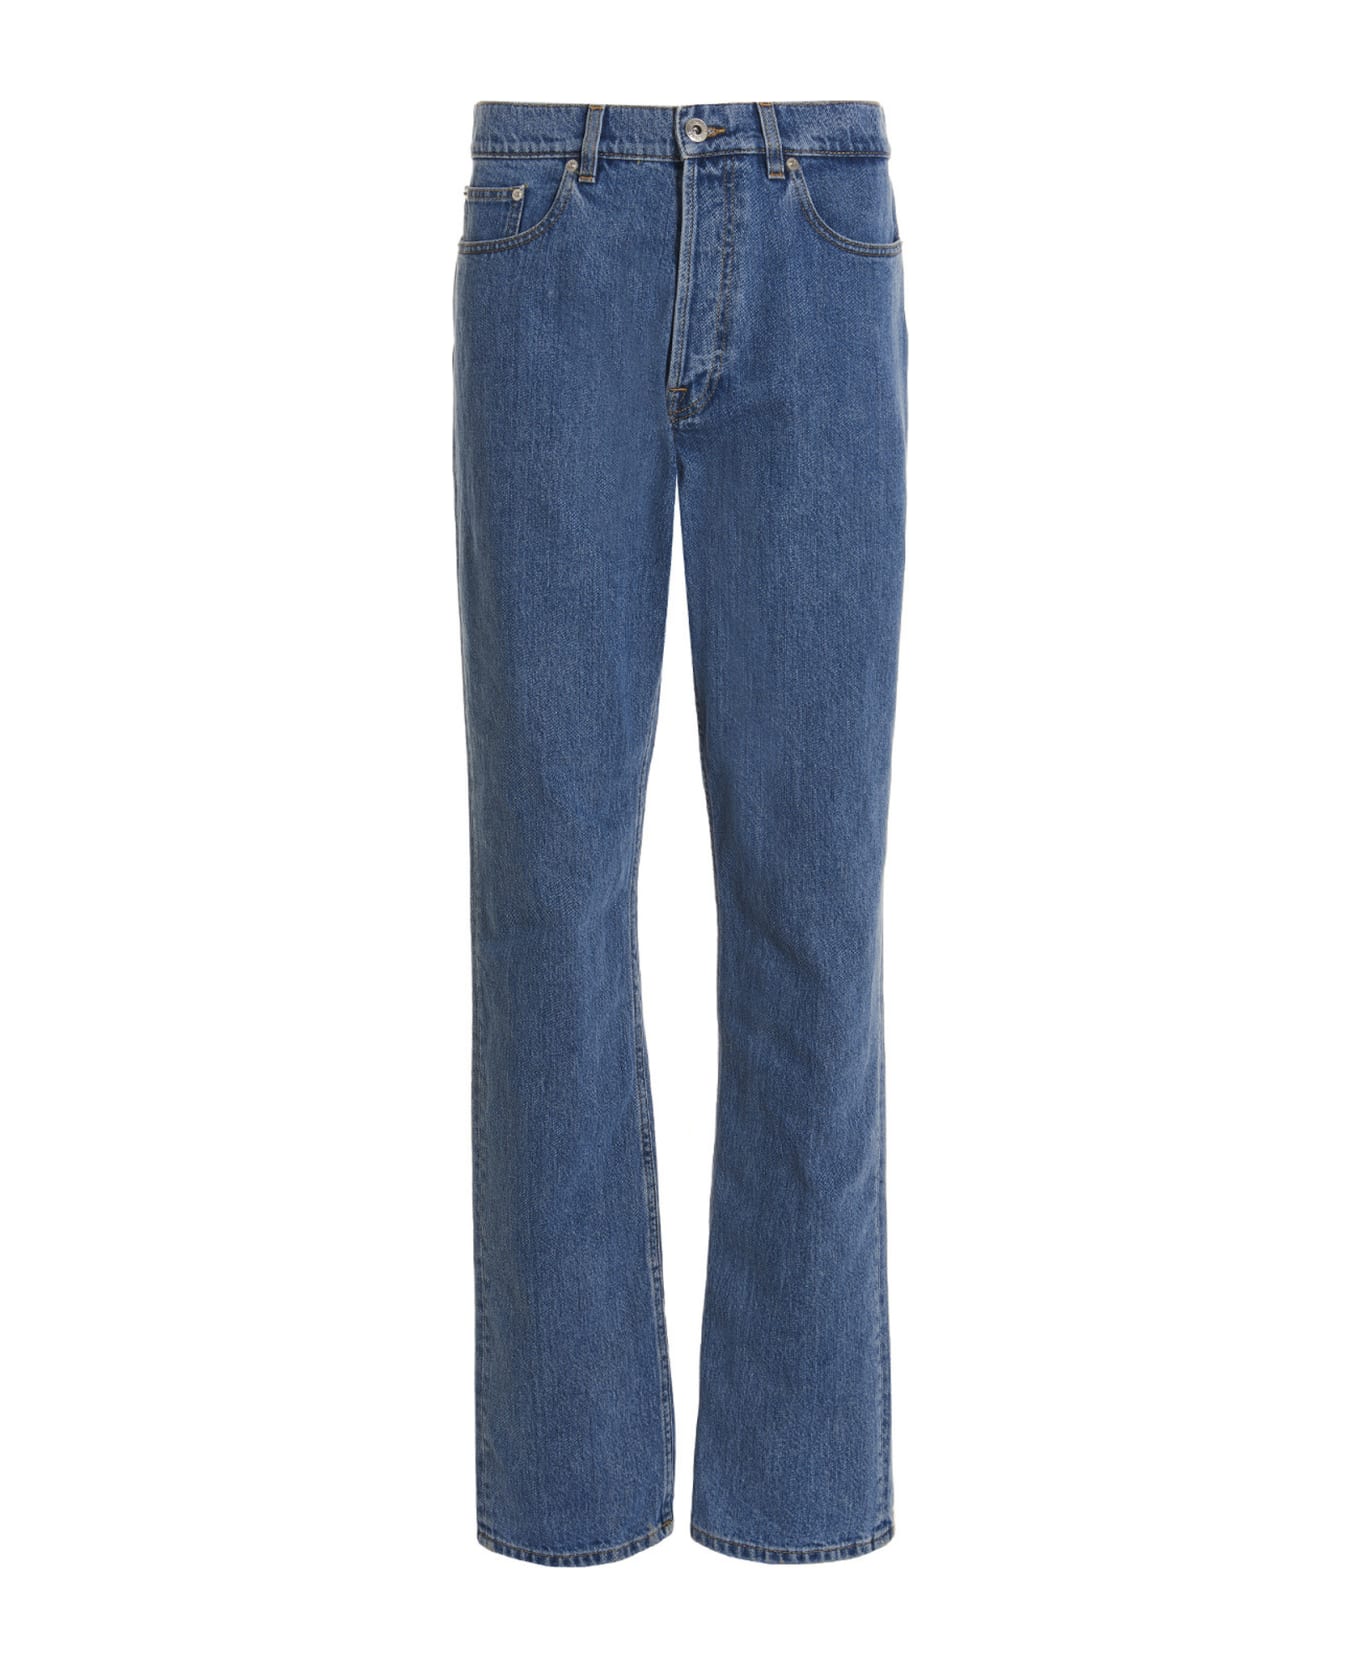 Lanvin Curb Fit Jeans | italist